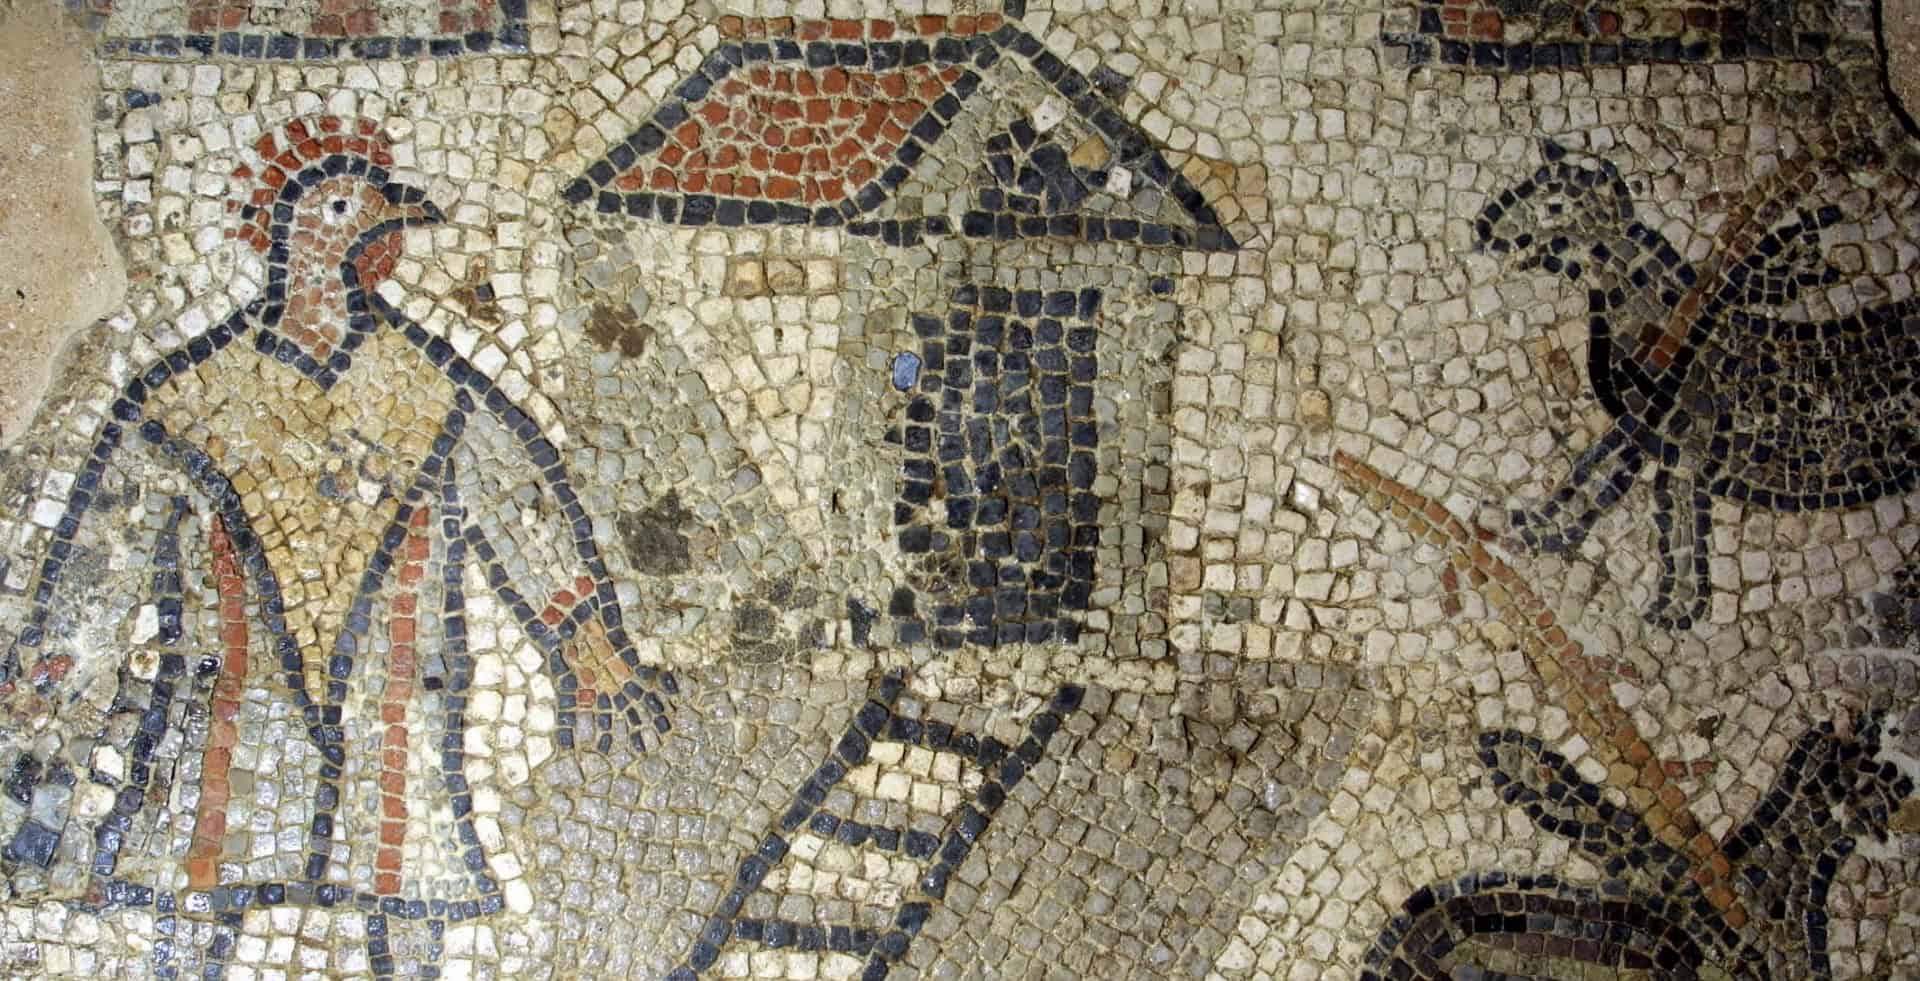 The 4th century Gallus Mosaic with the cockerel-headed man. Brading Roman Villa Trust.